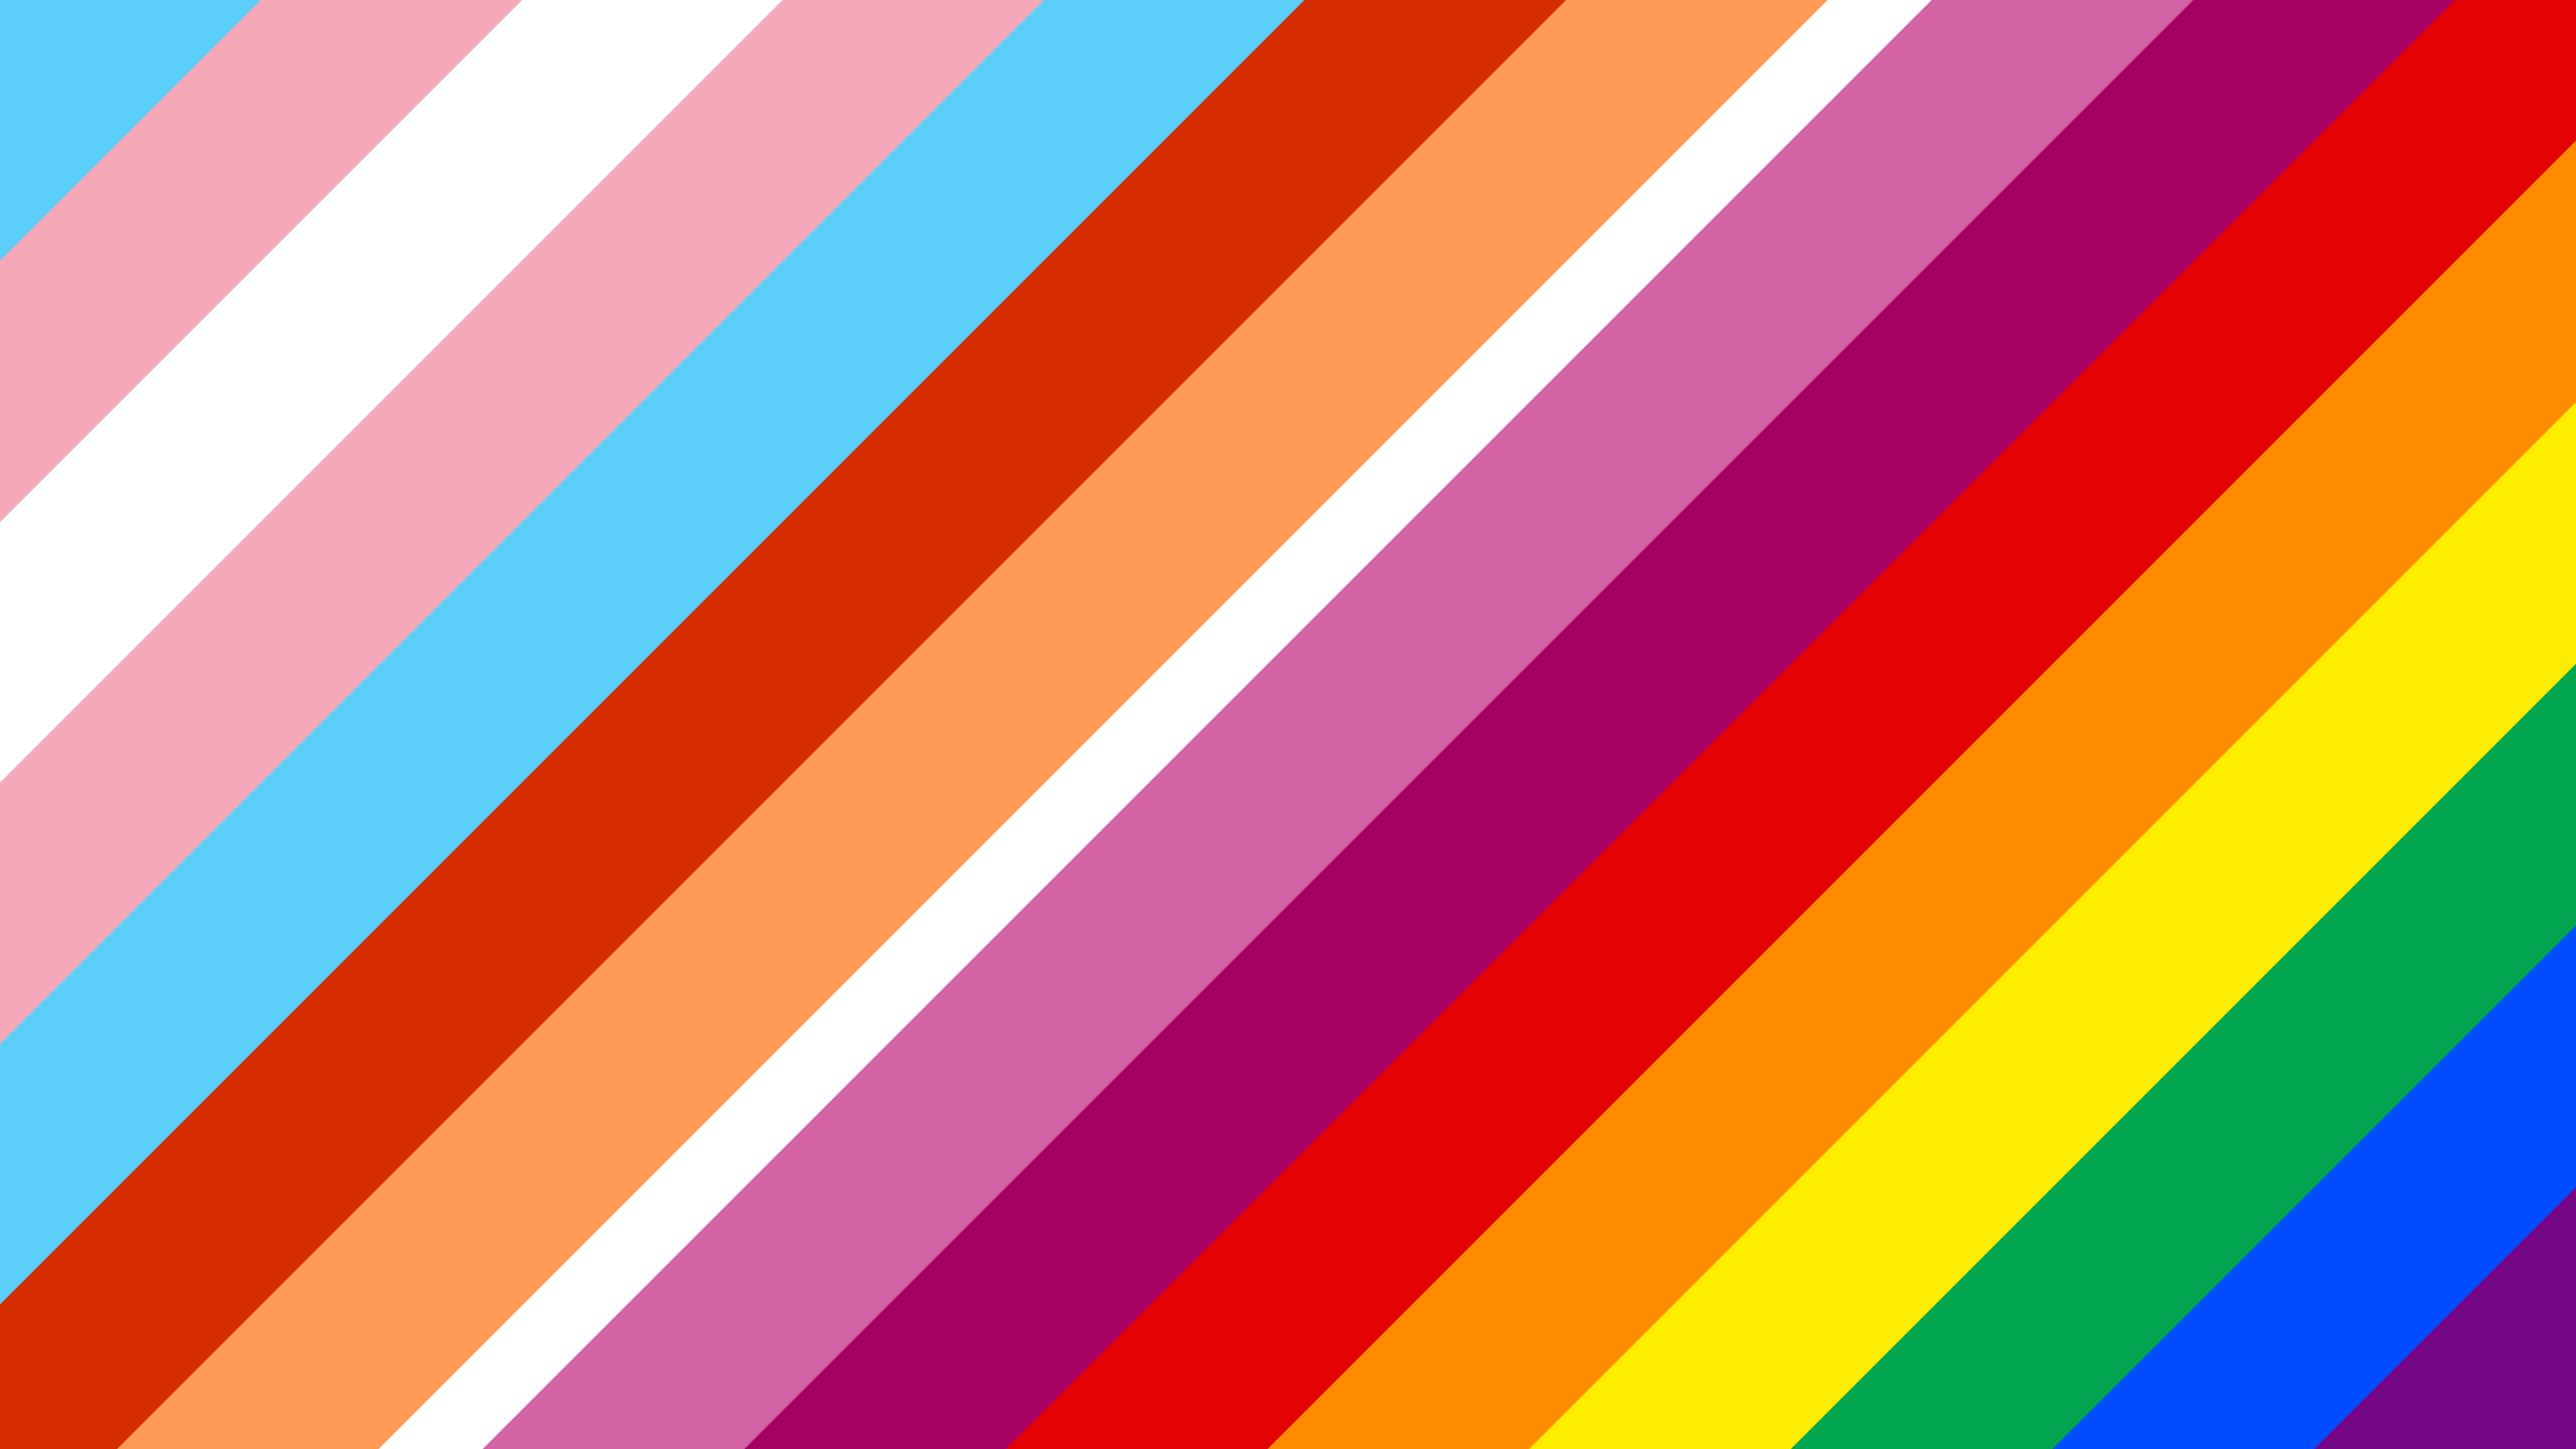 gay pride wallpaper android